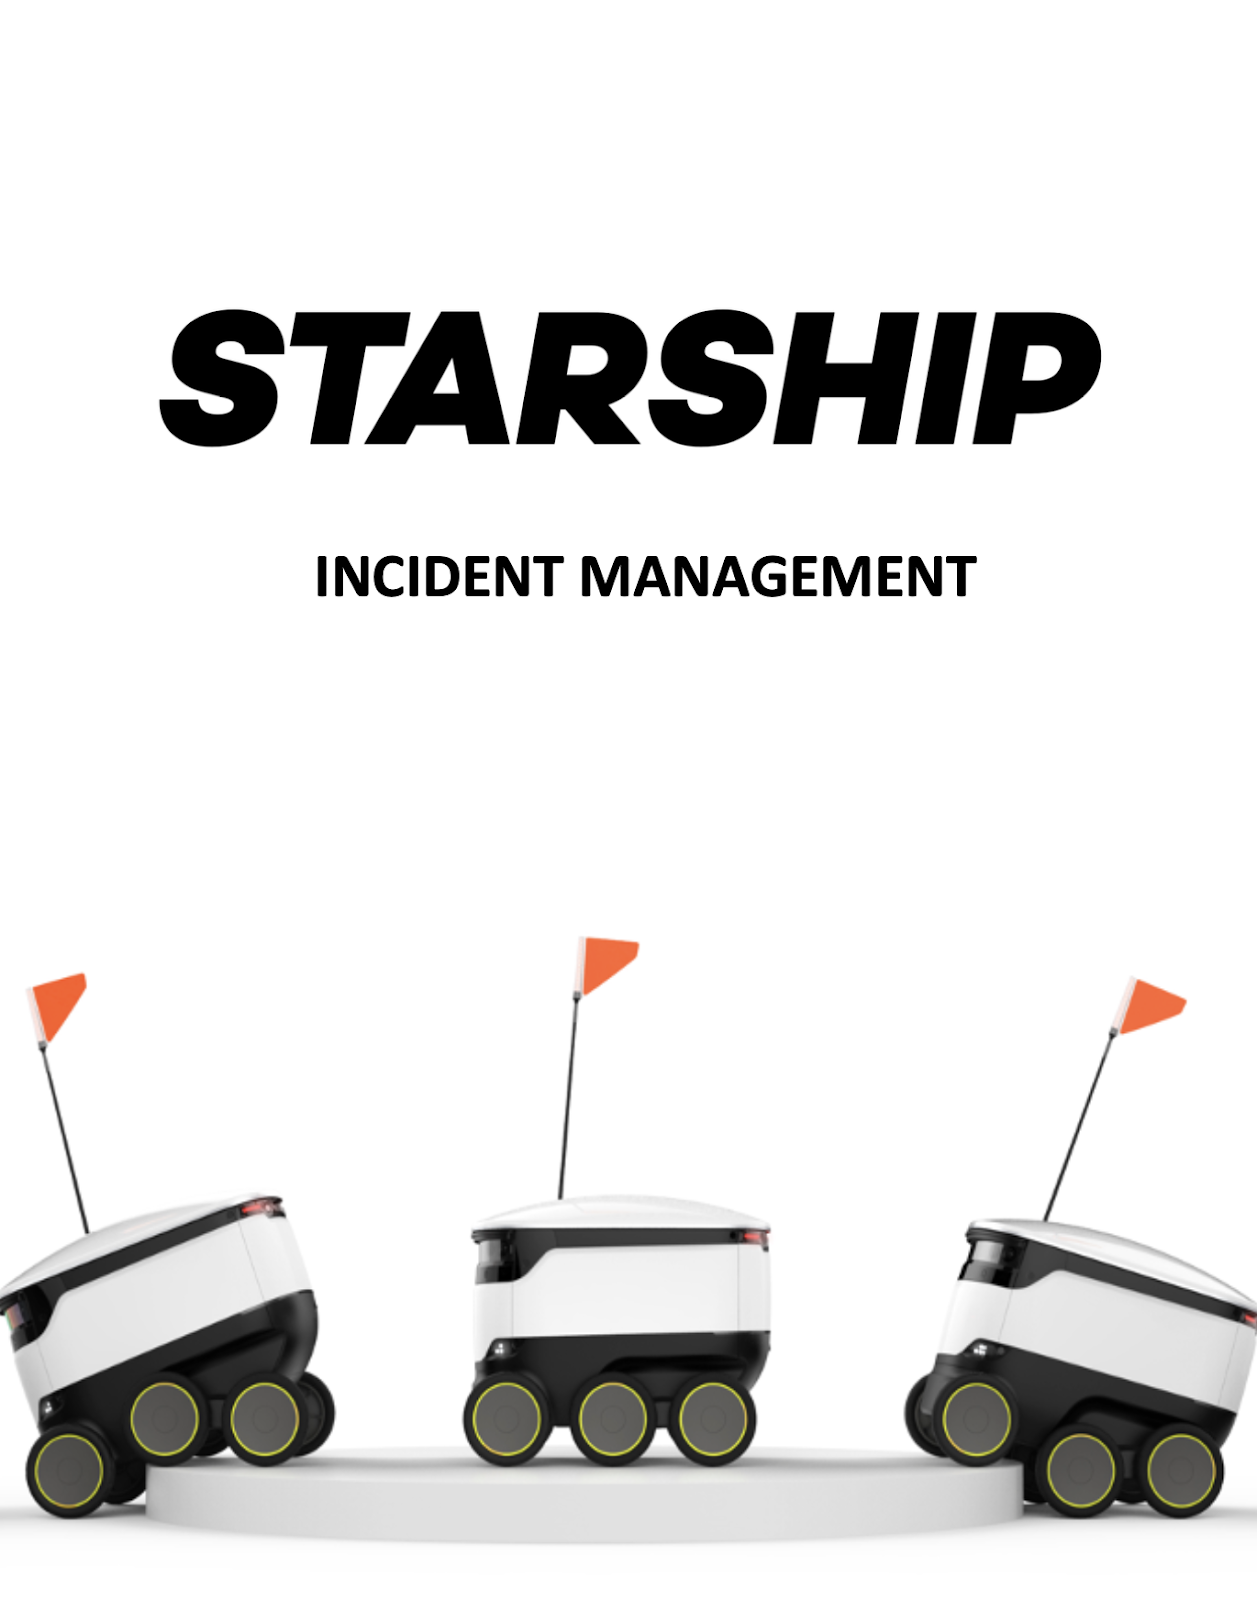 Starship's Incident Management document